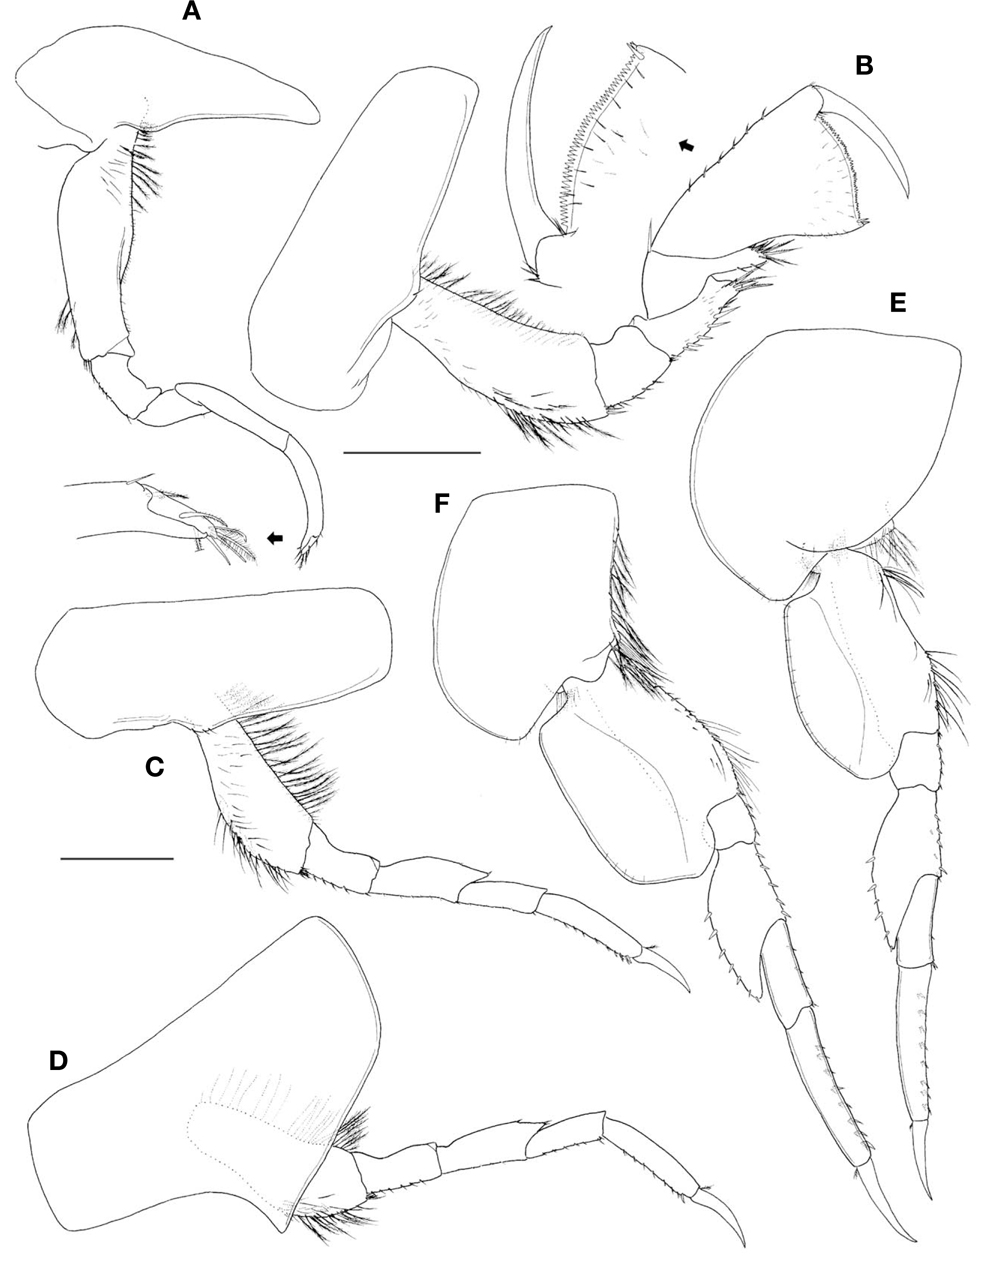 Cryptodius kelleri (Bruggen, 1907), female, 6.6 mm: A, Gnathopod 1; B, Gnathopod 2; C, Pereopod 3; D, Pereopod 4; E, Pereopod 5; F, Pereopod 6. Scale bars: A-F=0.4 mm.